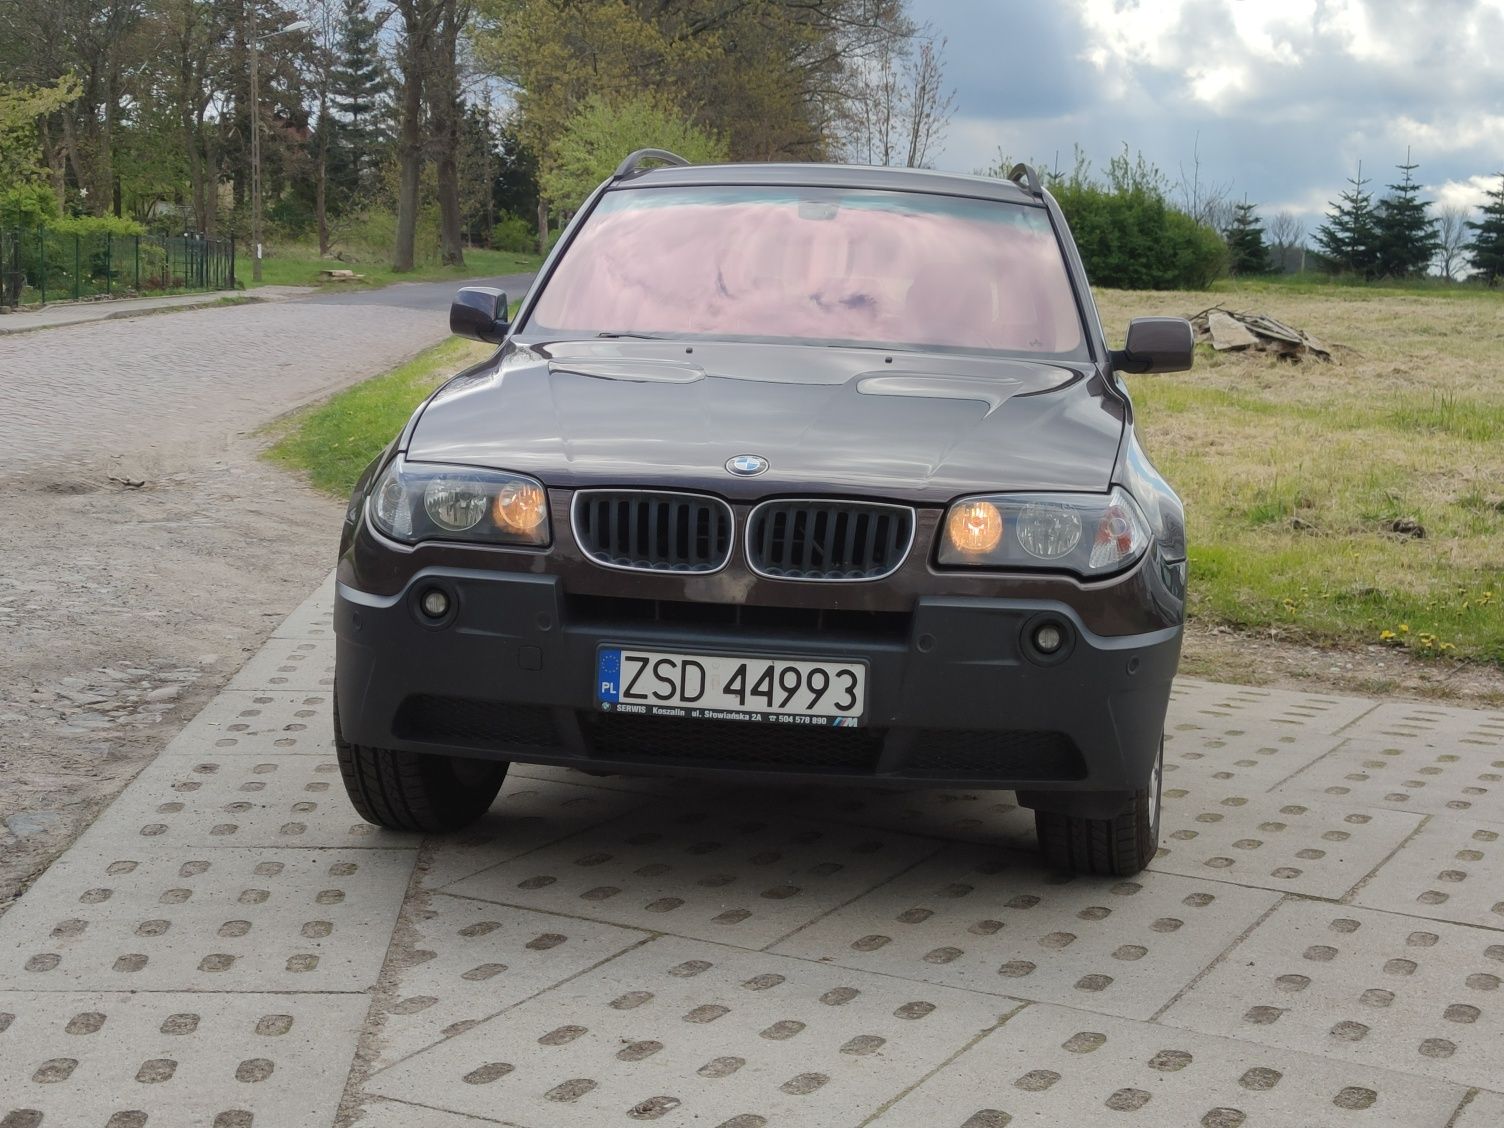 BMW X3 Moccabraun e83 2.0d 150km 4x4 Android Spotify Klima suv